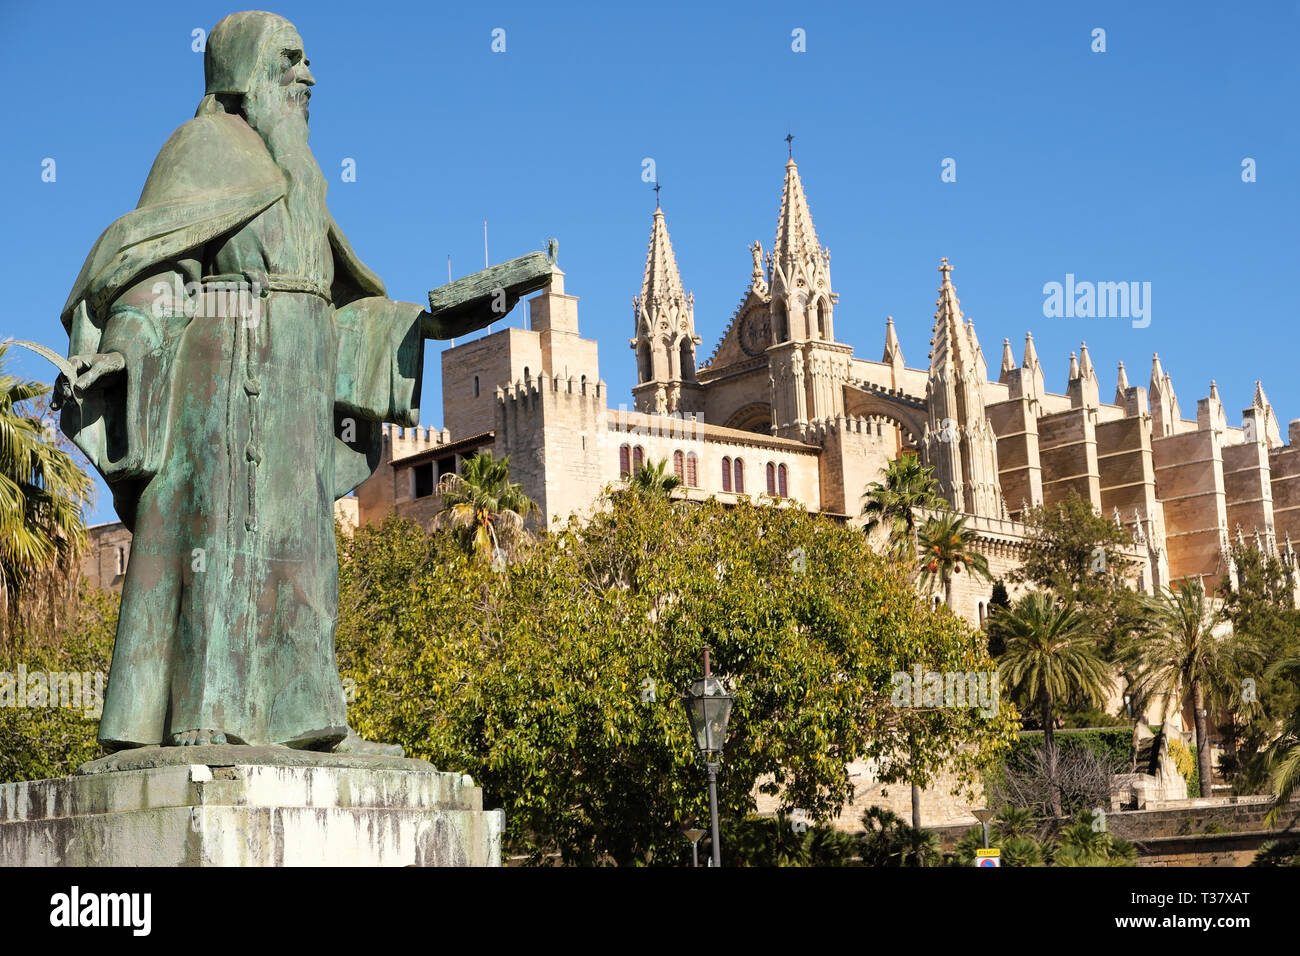 Palma de Mallorca, Spain - March 25, 2019 : side view of the famous gothic cathedral Santa Maria La Seu, the Kings palace Almudaina and statue of Ramo Stock Photo